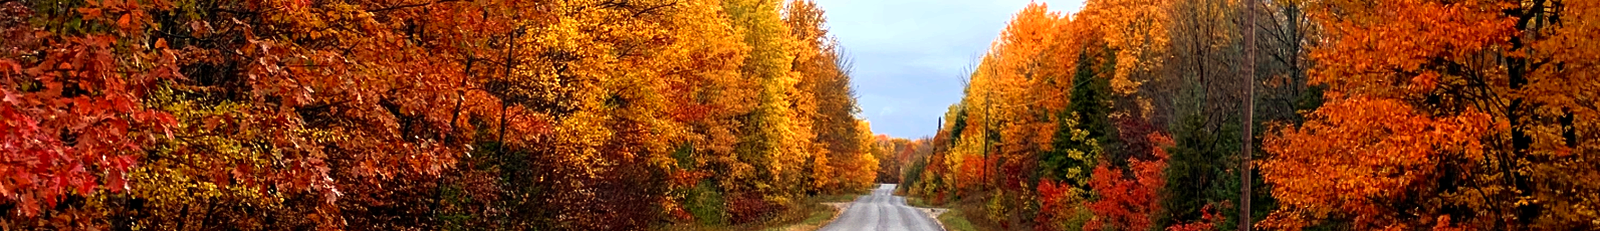 Kawartha Lakes Hideaway Road with trees in fall foliage